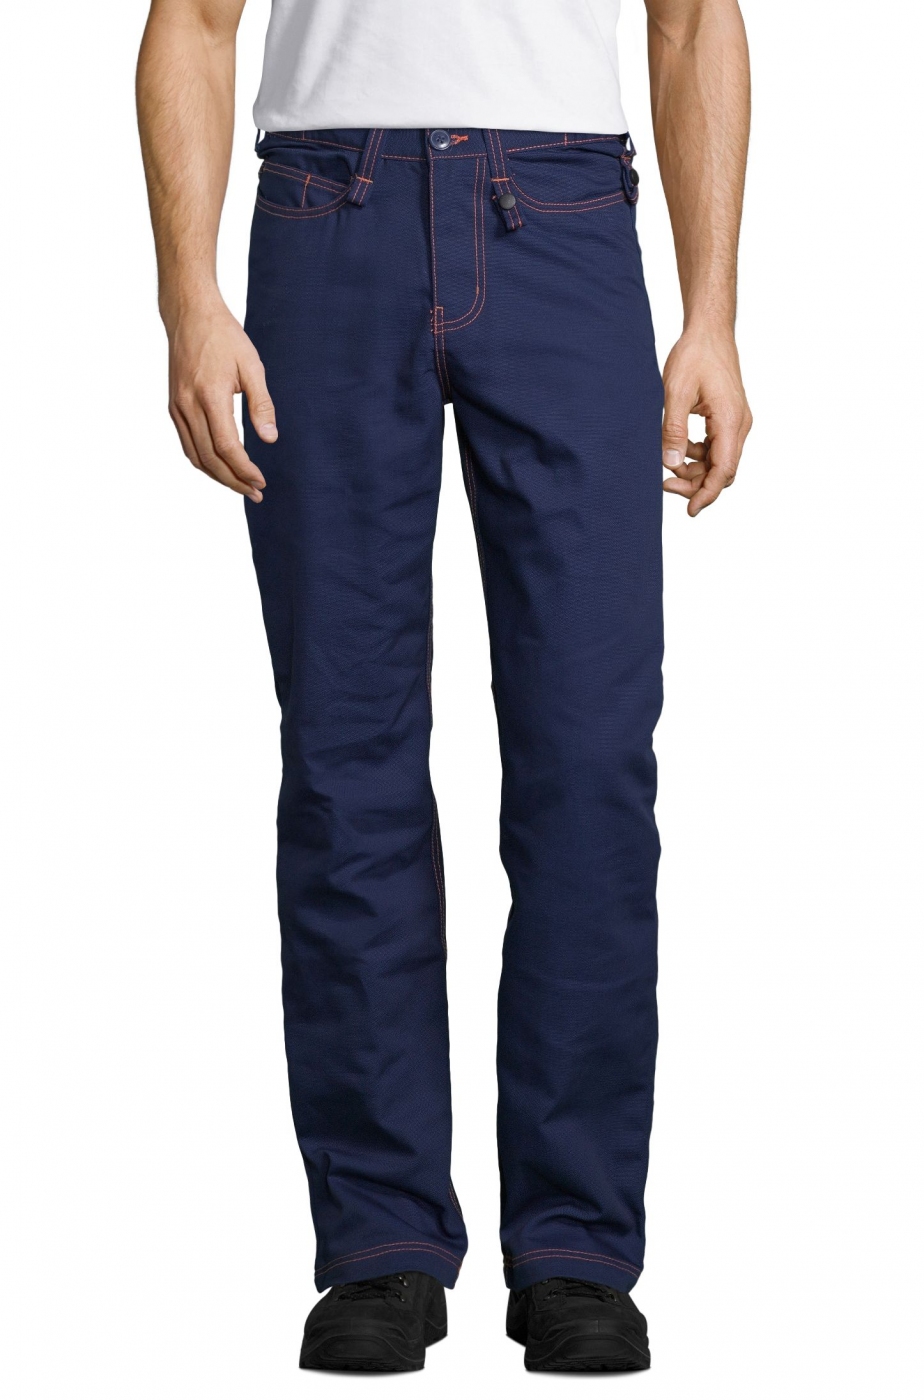 Pantalon de lucru si protectie, tip jeans cu 5 buzunare, material tercot, model barbat